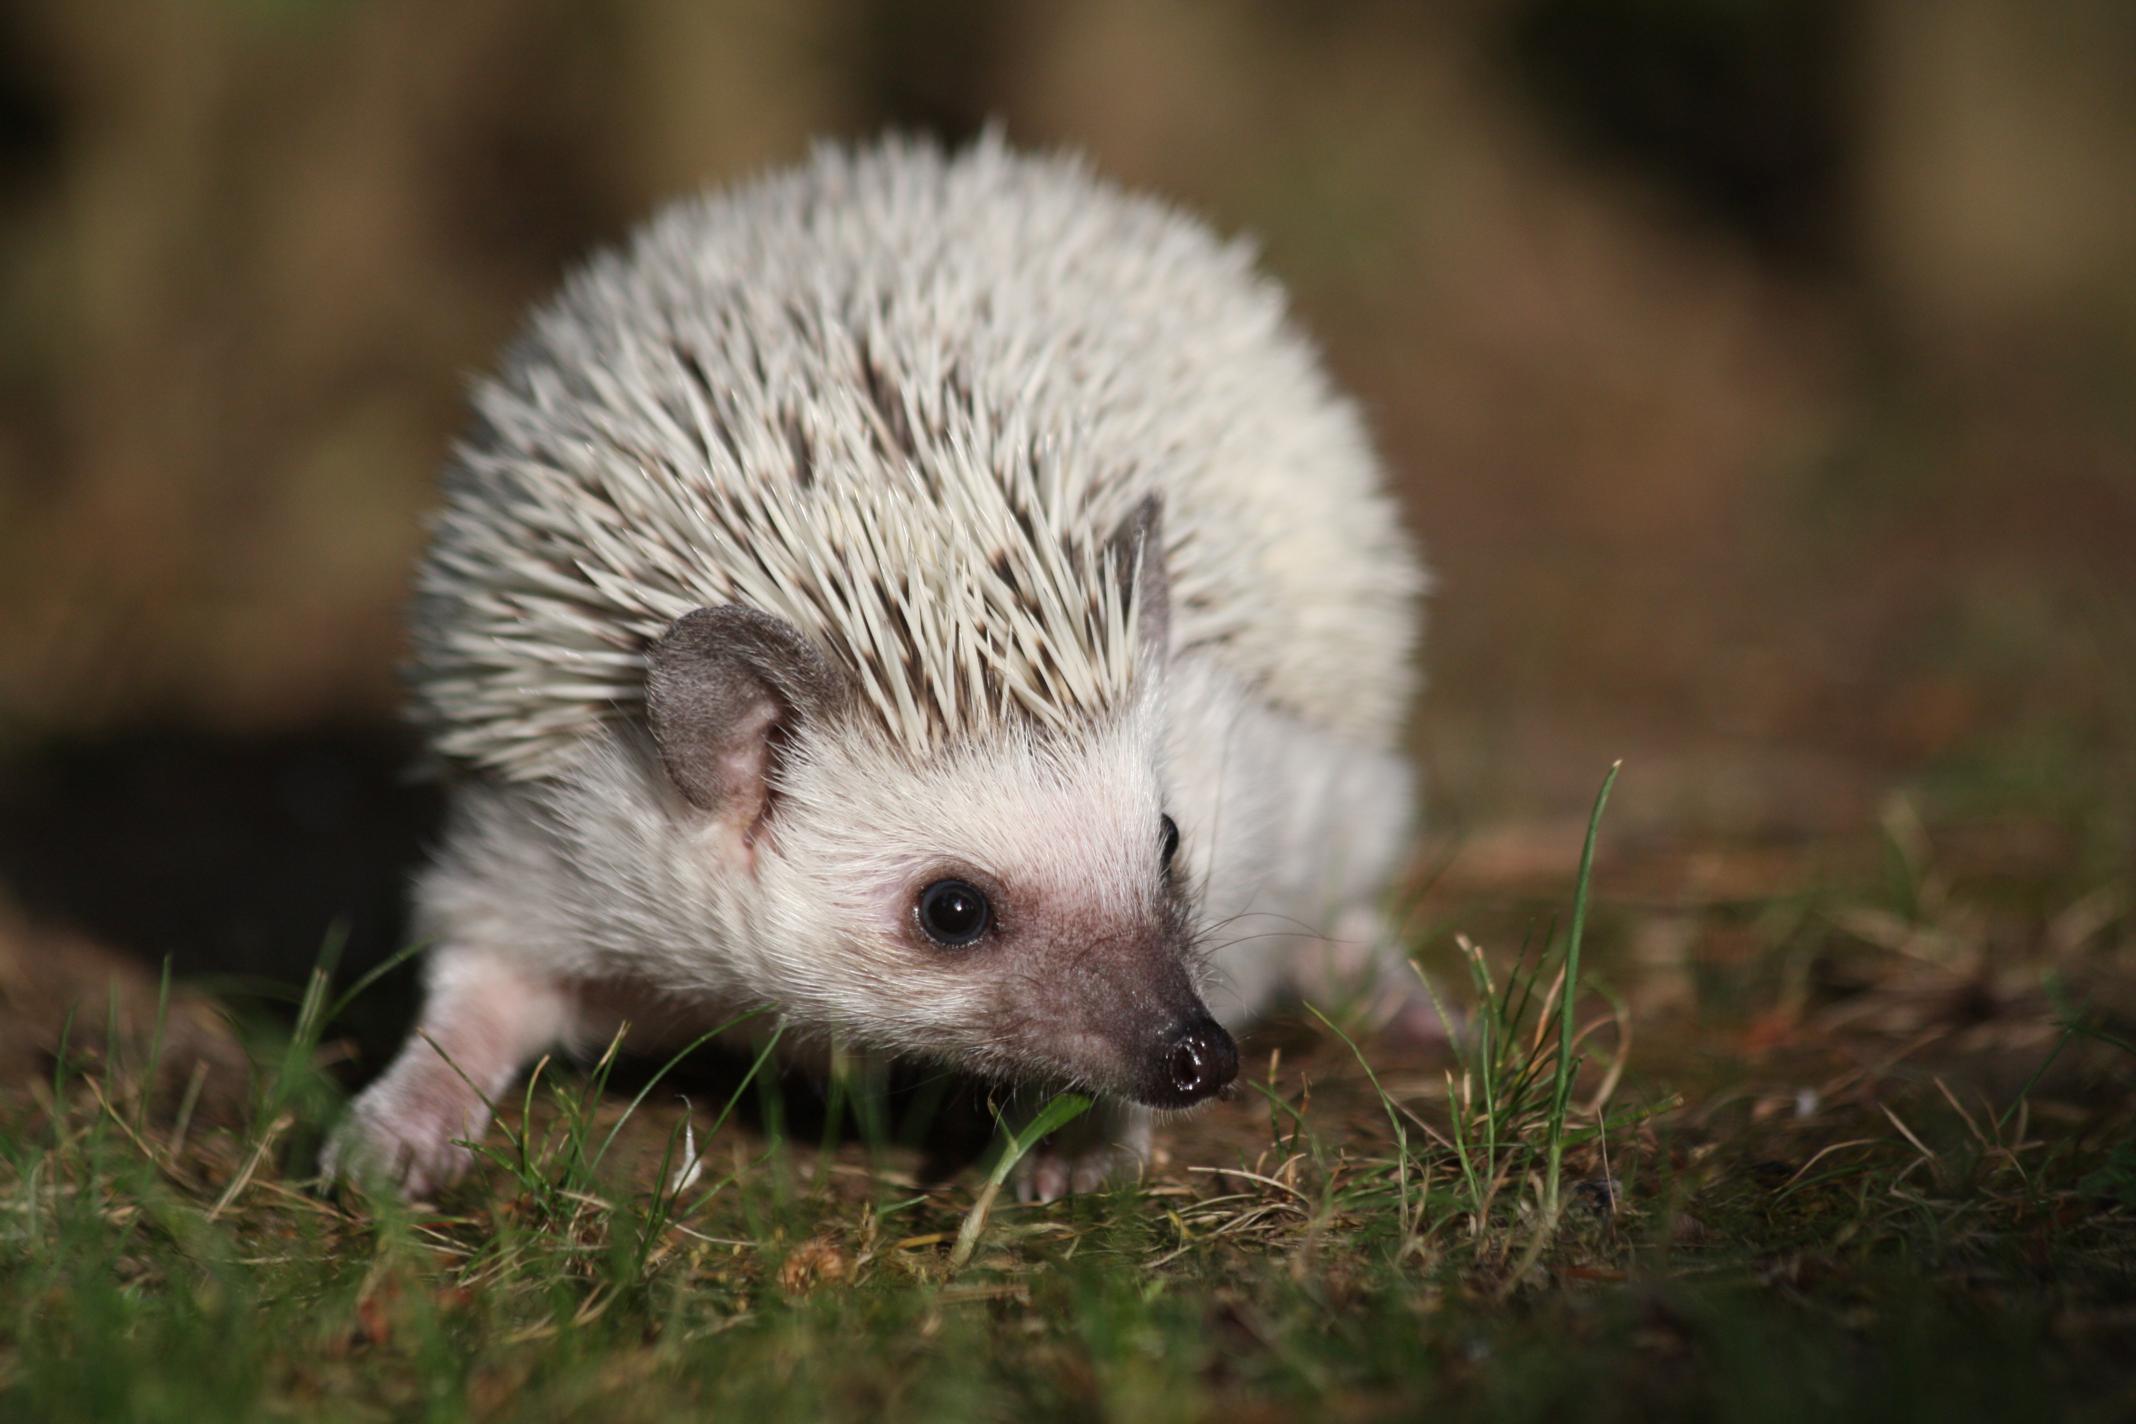 Benefits of keeping a hedgehog as a pet